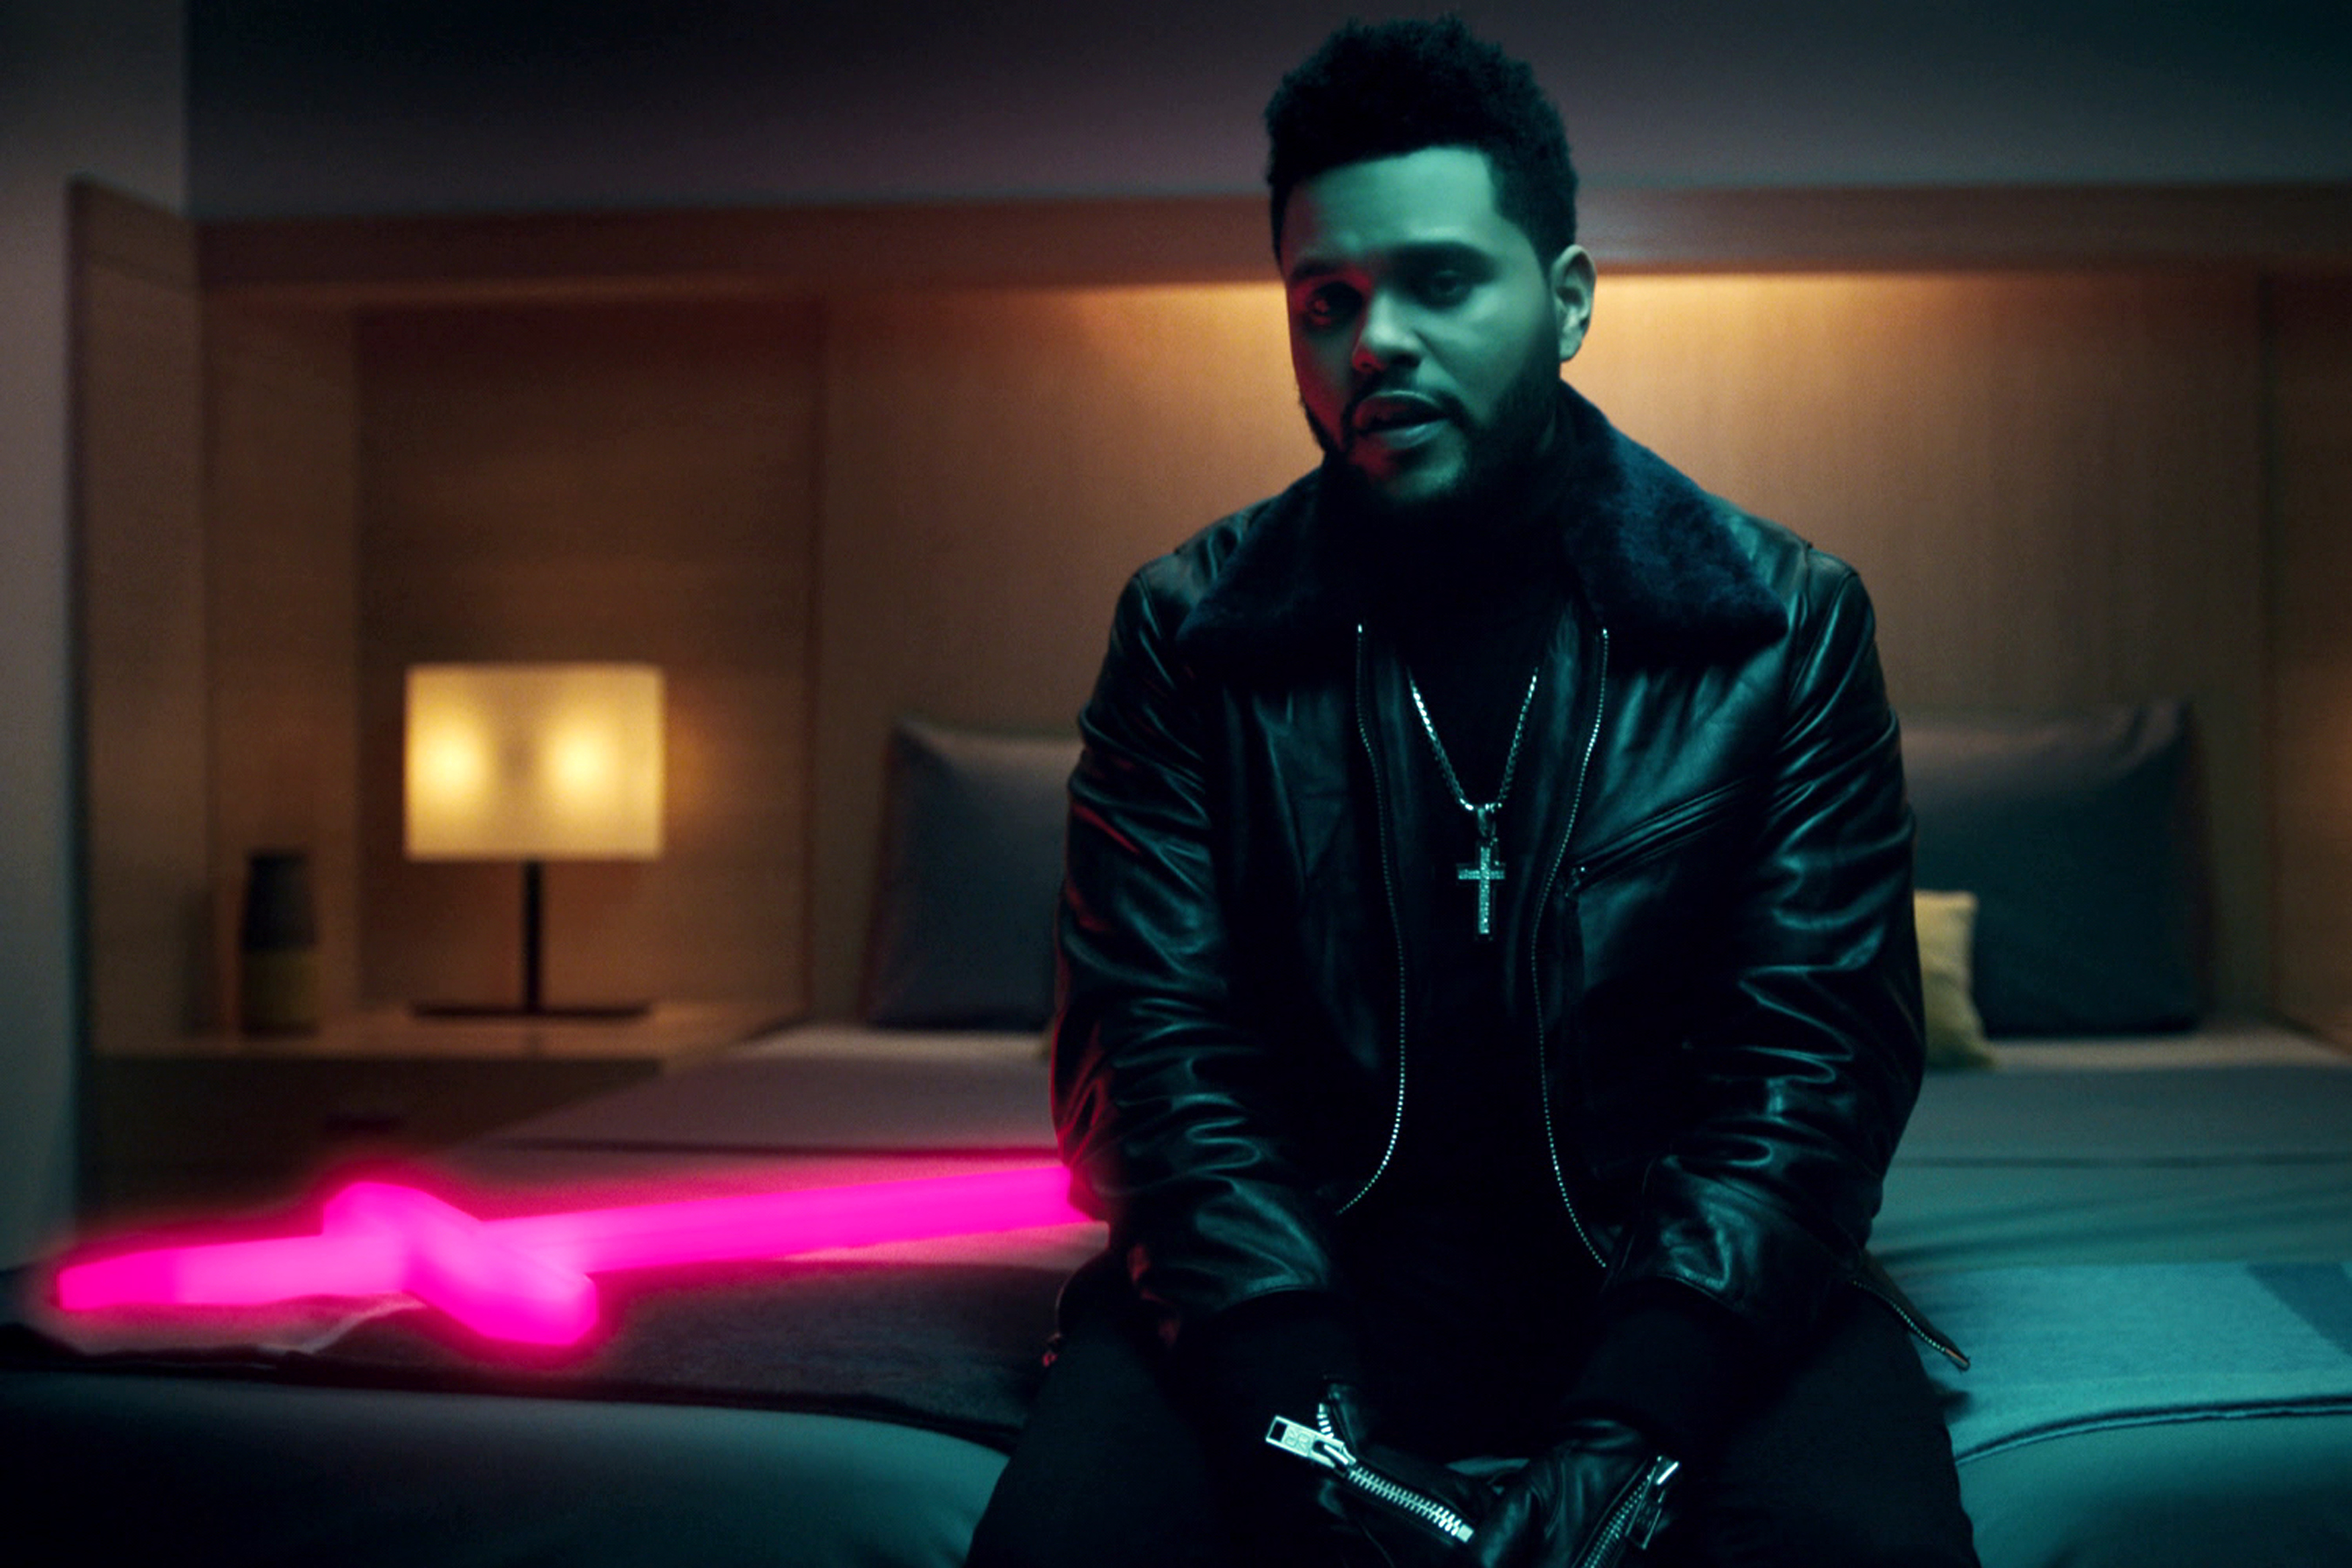 Э нова песня. The Weeknd. Уикенд старбой. Starboy обложка. The weekend 2015.